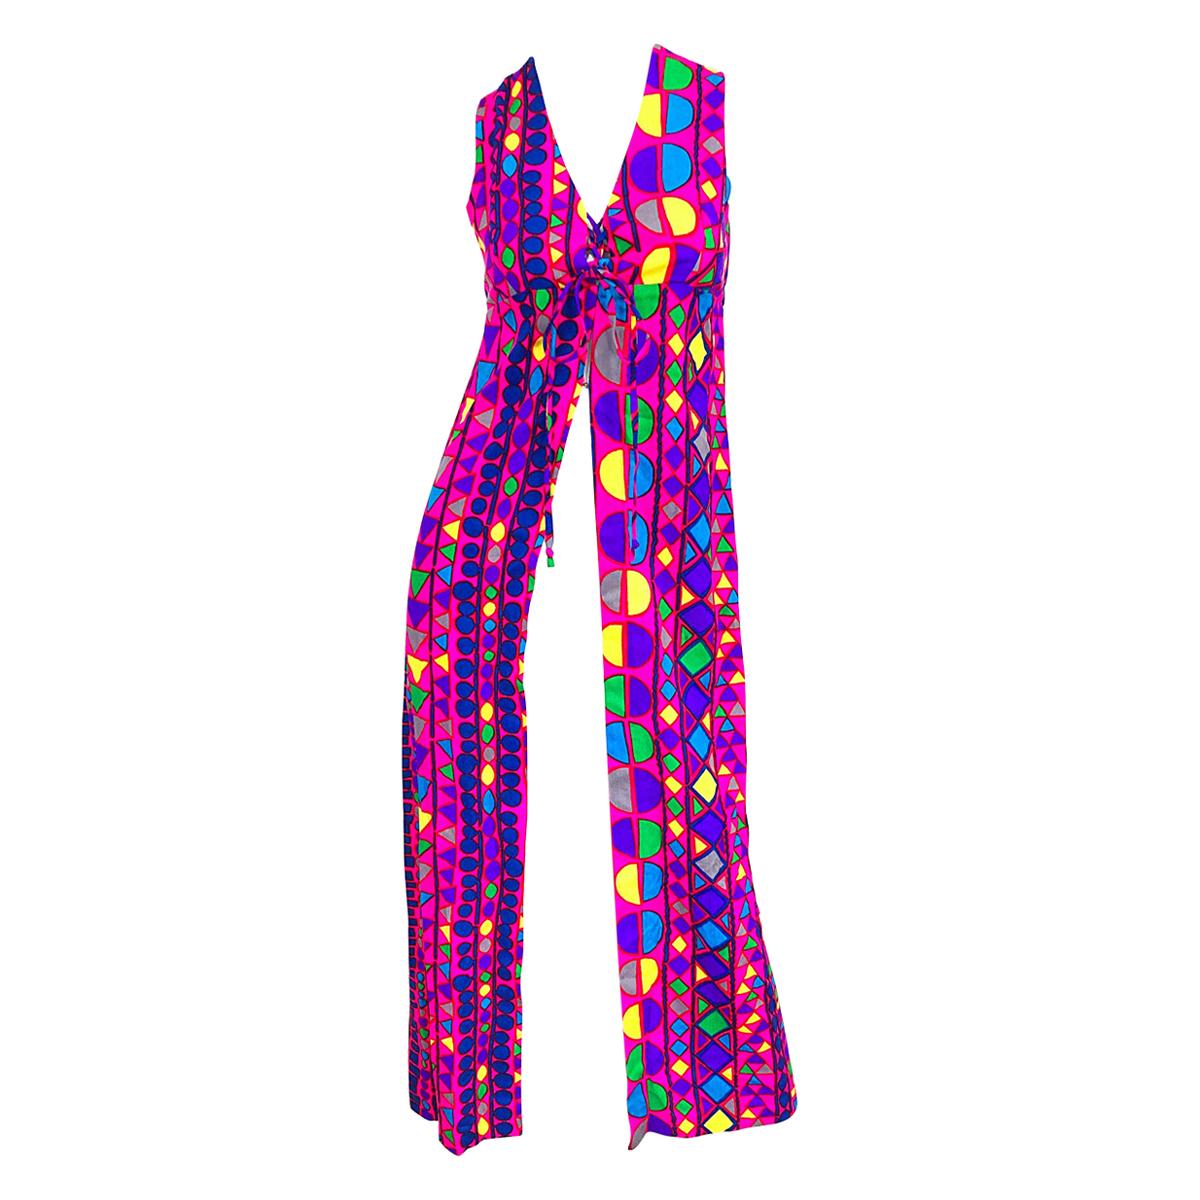 Amazing 1970s Joseph Magnin Vibrant Colorful Abstract Mosaic Vest 70s Maxi Dress